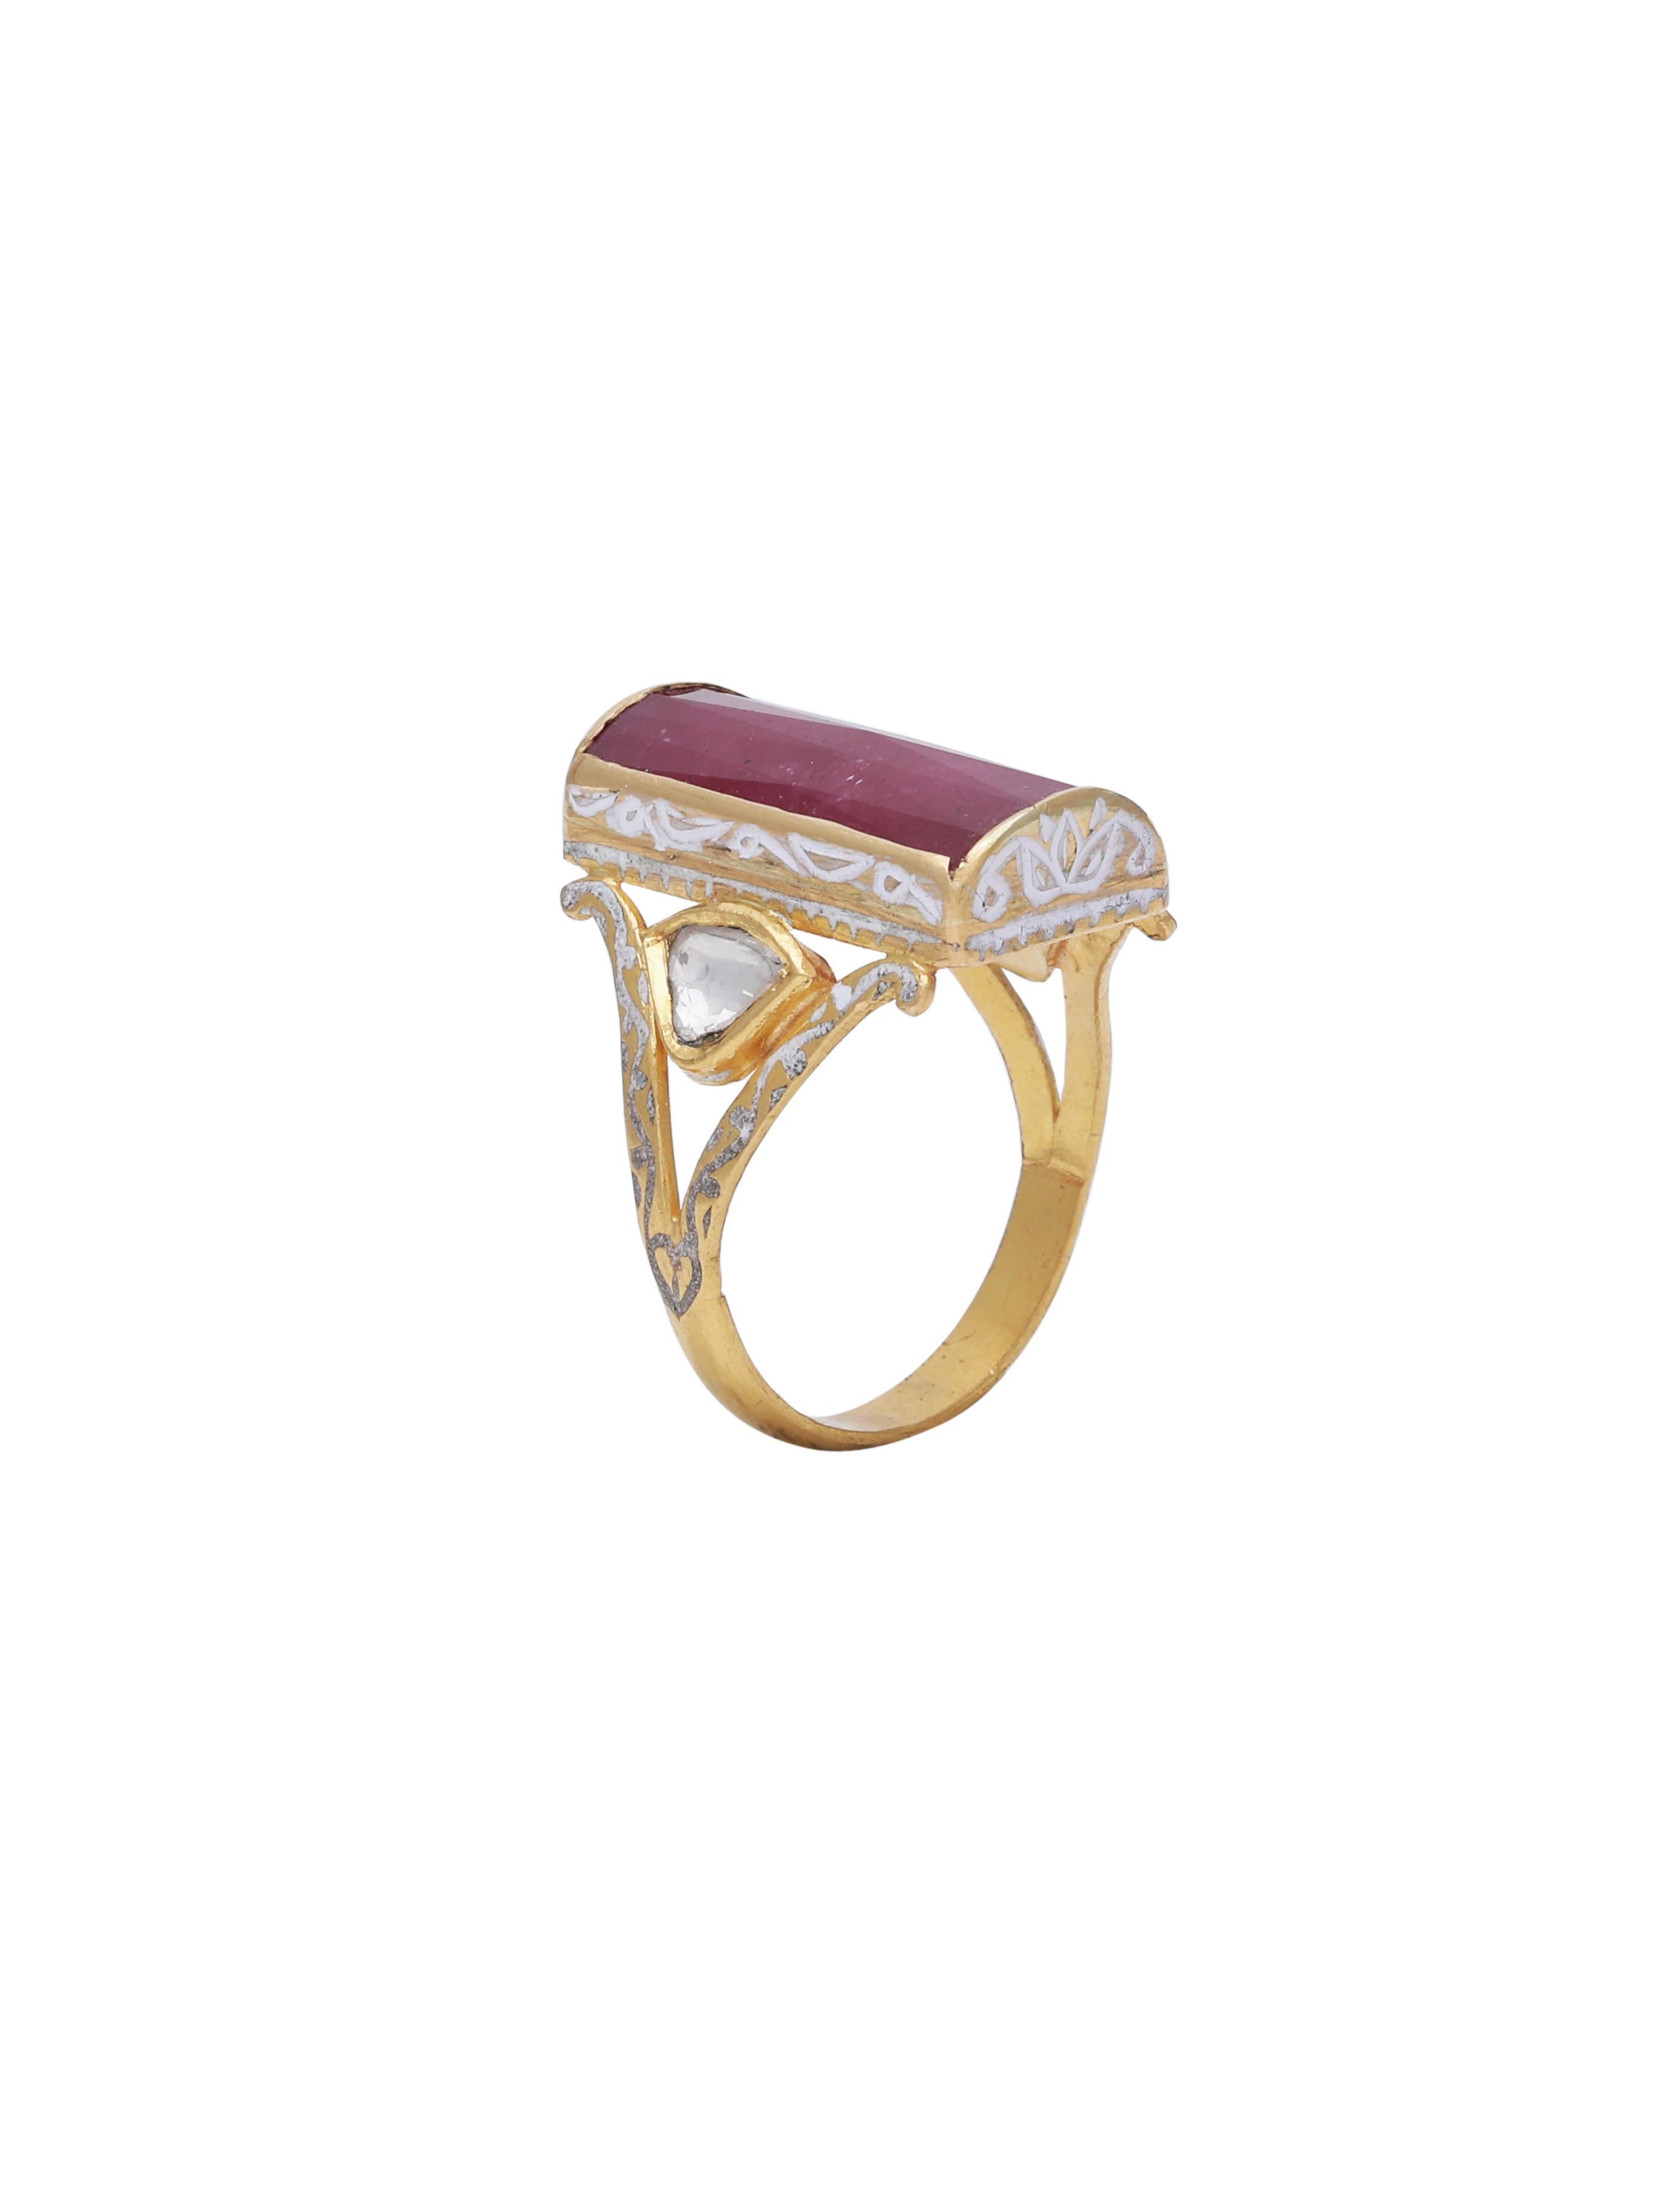 Art Deco Ruby and Diamond 18 Karat Gold Ring with Enamel